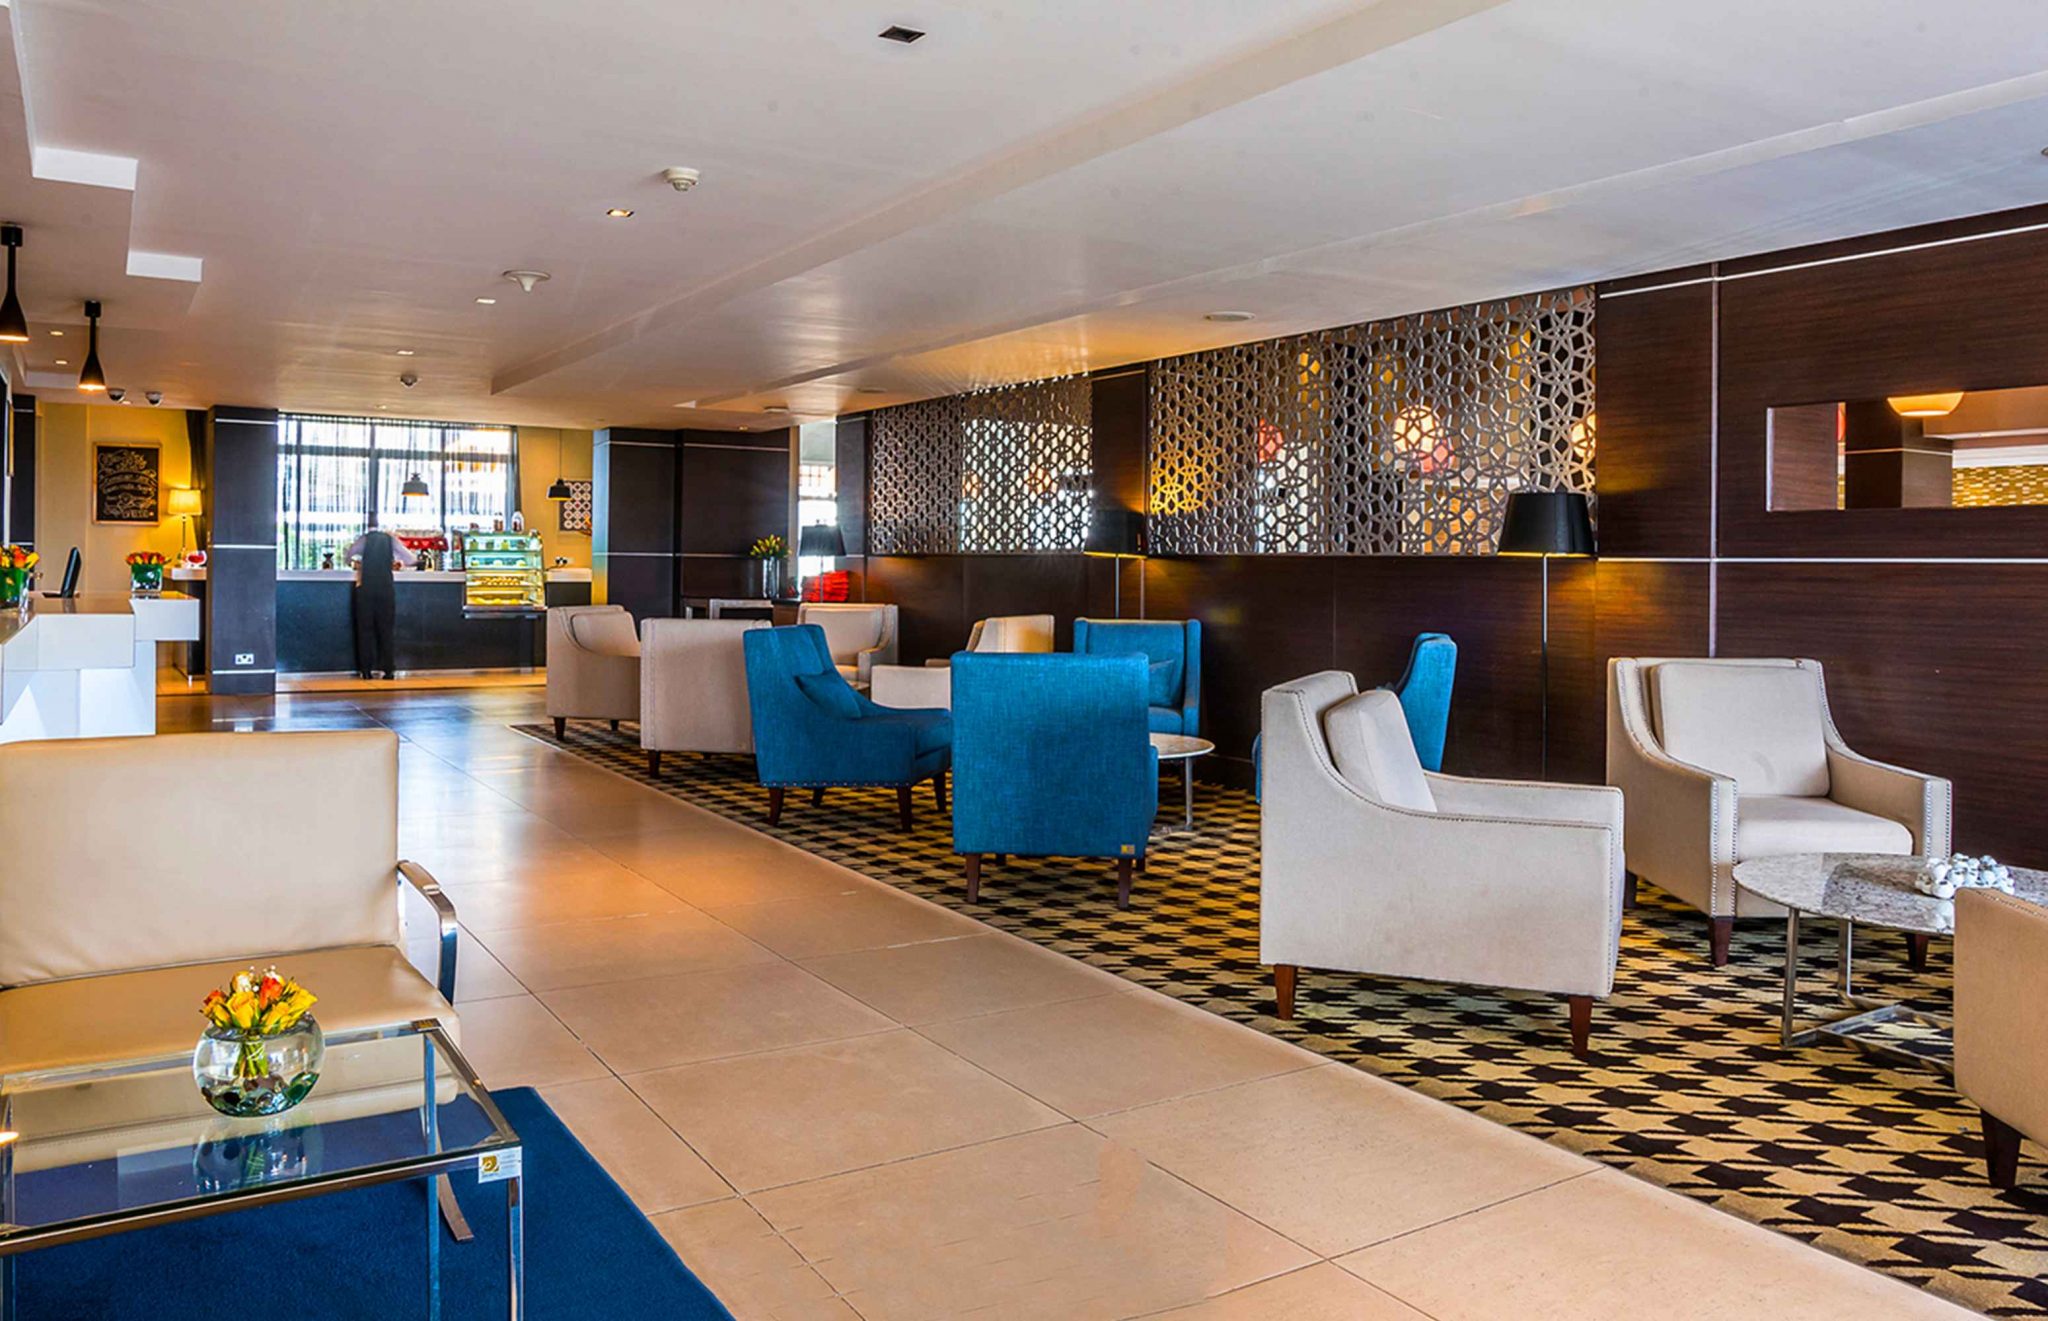 Hotel Lobby - 2023 Kenya Safari - photography workshops & luxury tours for travellers